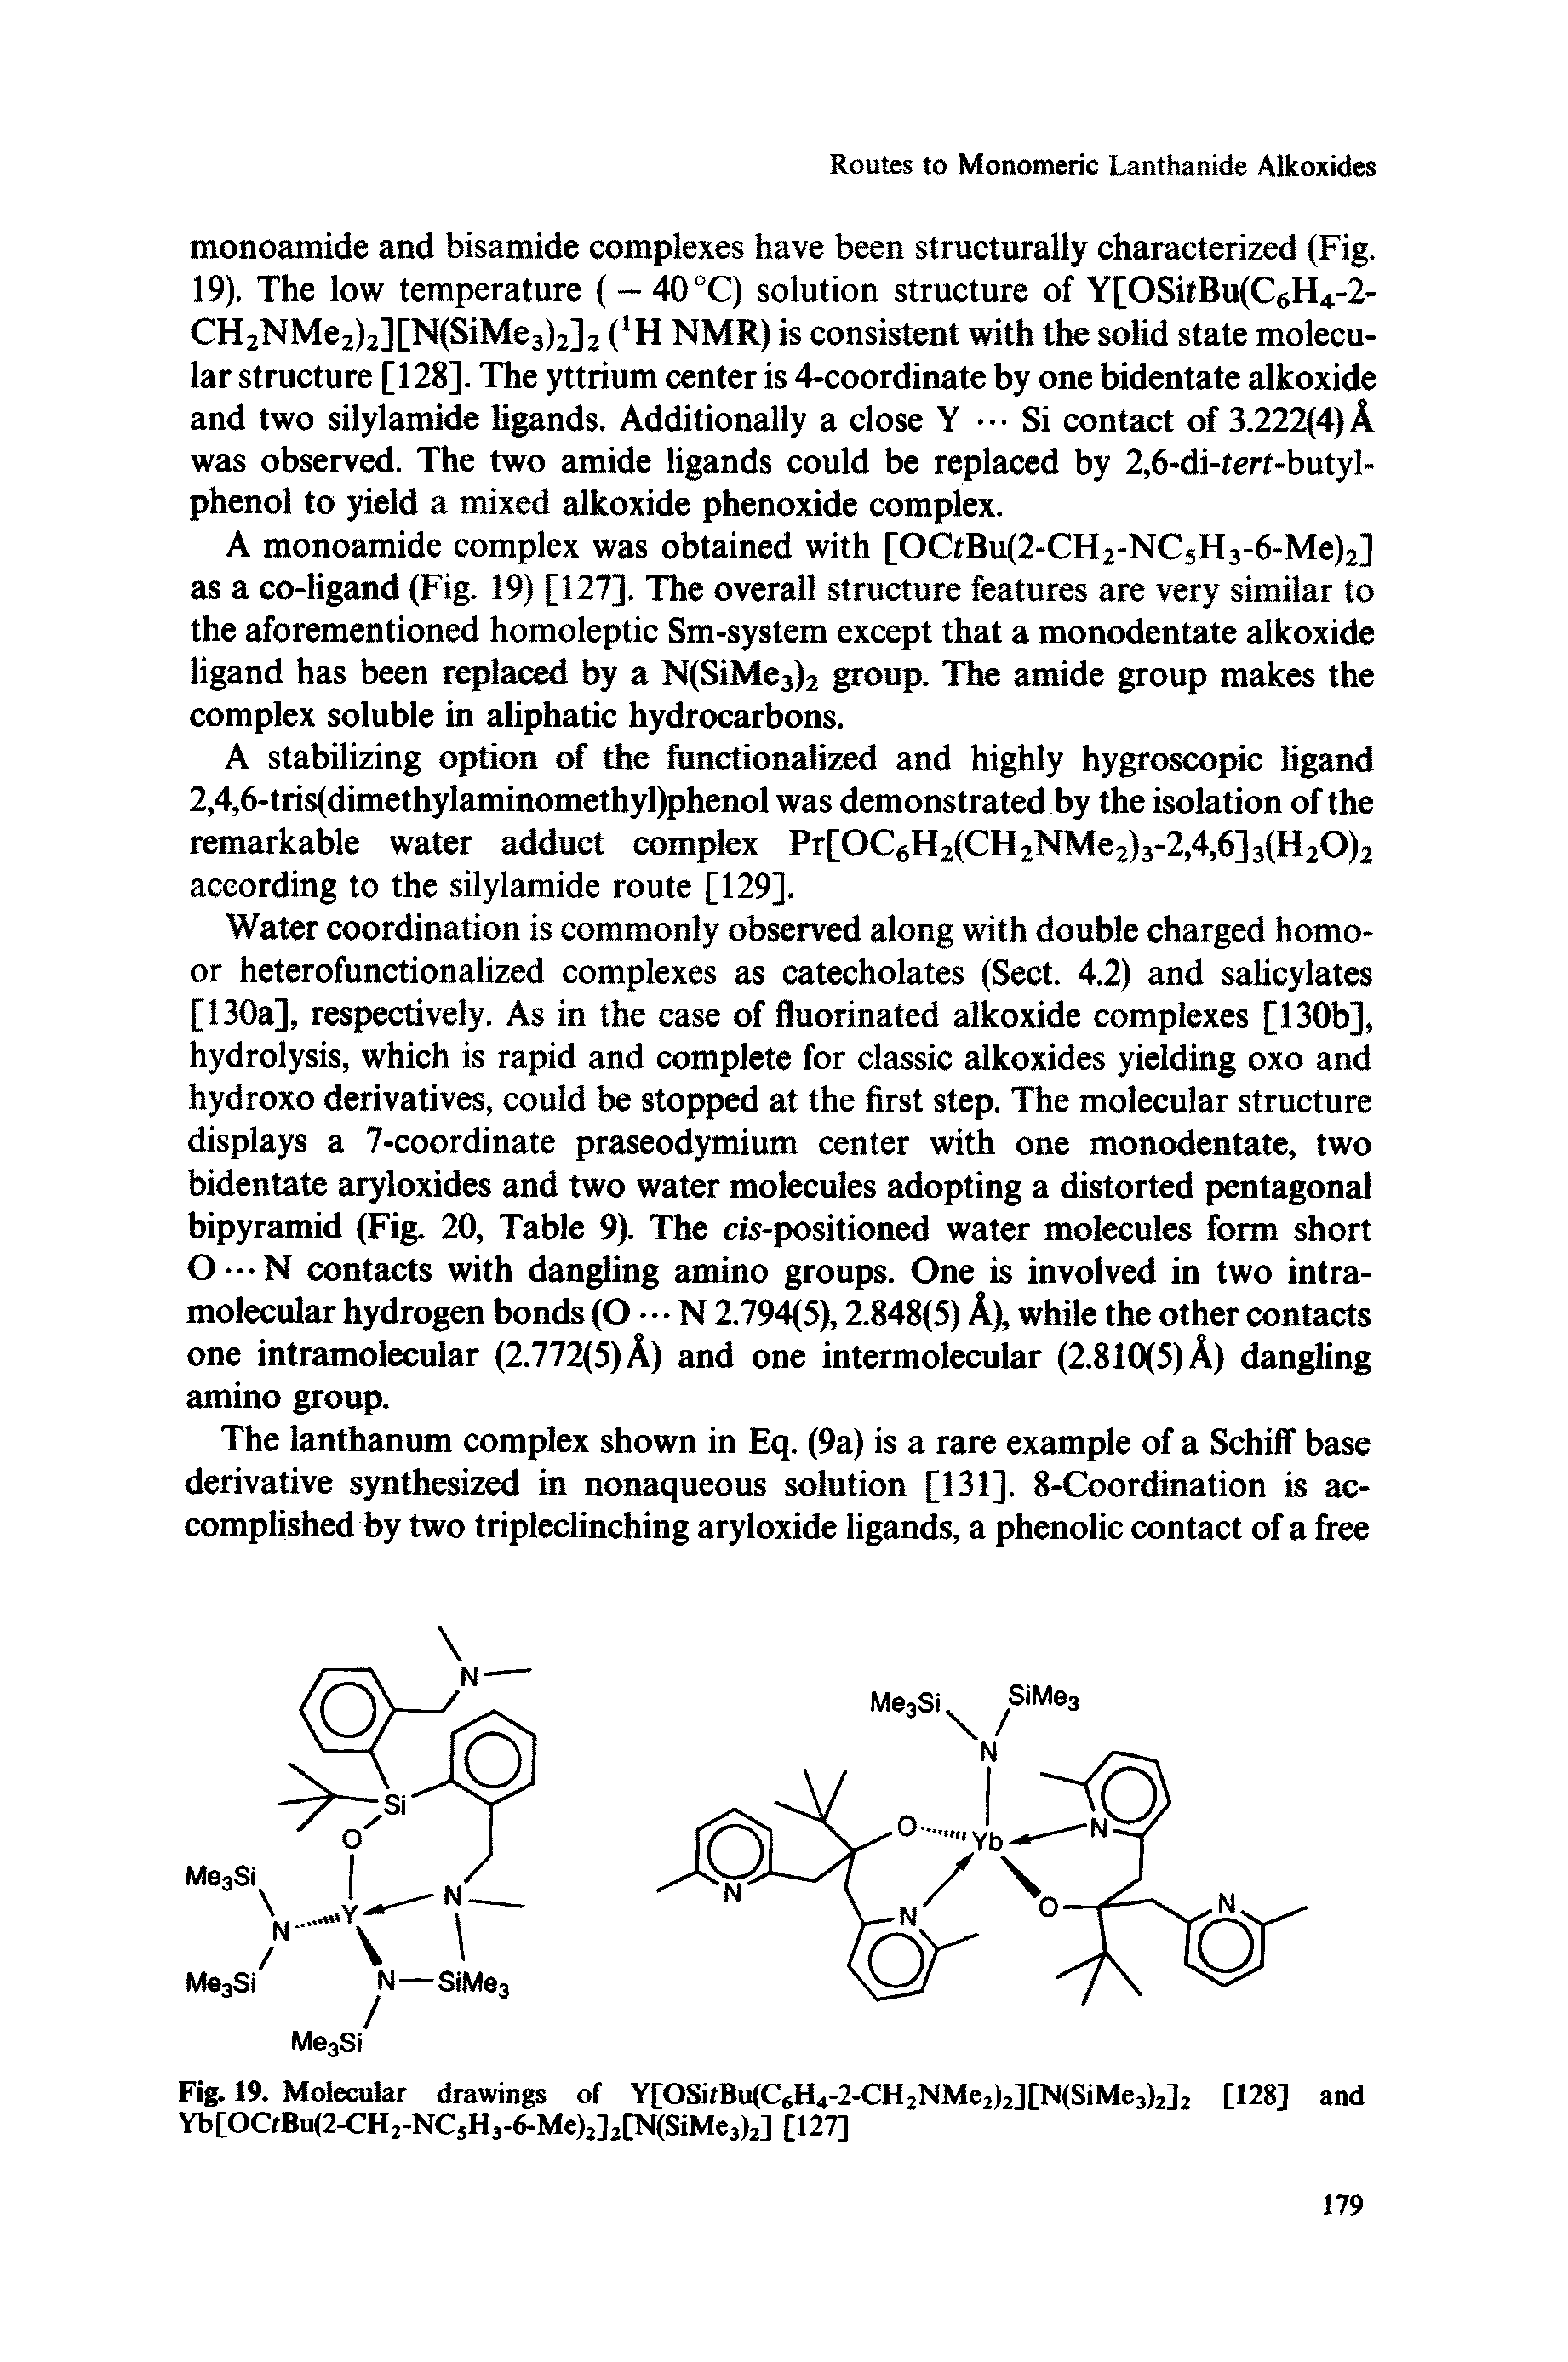 Fig. 19. Molecular drawings of Y[OSifBu(C6H4-2-CH2NMe2)2][N(SiMe3)2L [128] and Yb [OCrBu(2-CH 2-NC5H 3-6-Me)2] 2[N(SiMe 3)2] [127]...